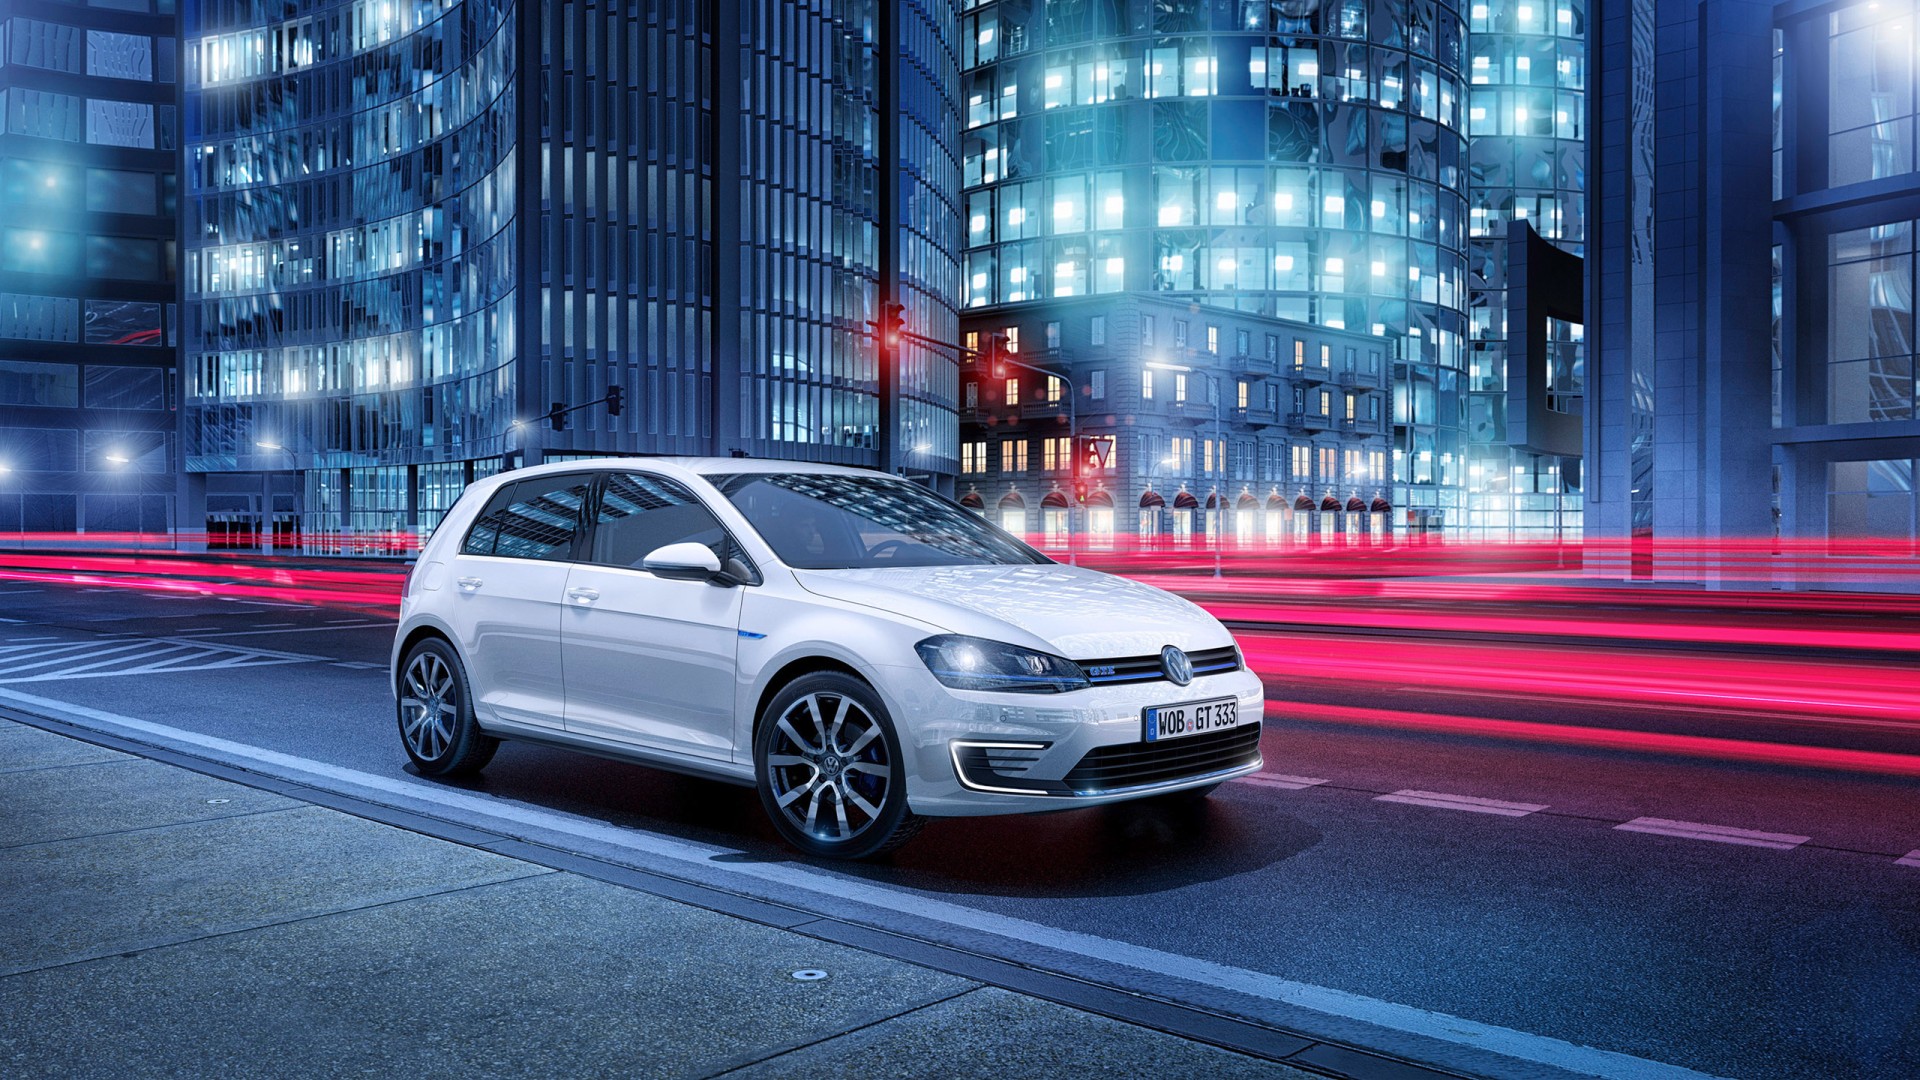 2014 Volkswagen Golf GTE Plug in Hybrid Wallpaper | HD Car Wallpapers